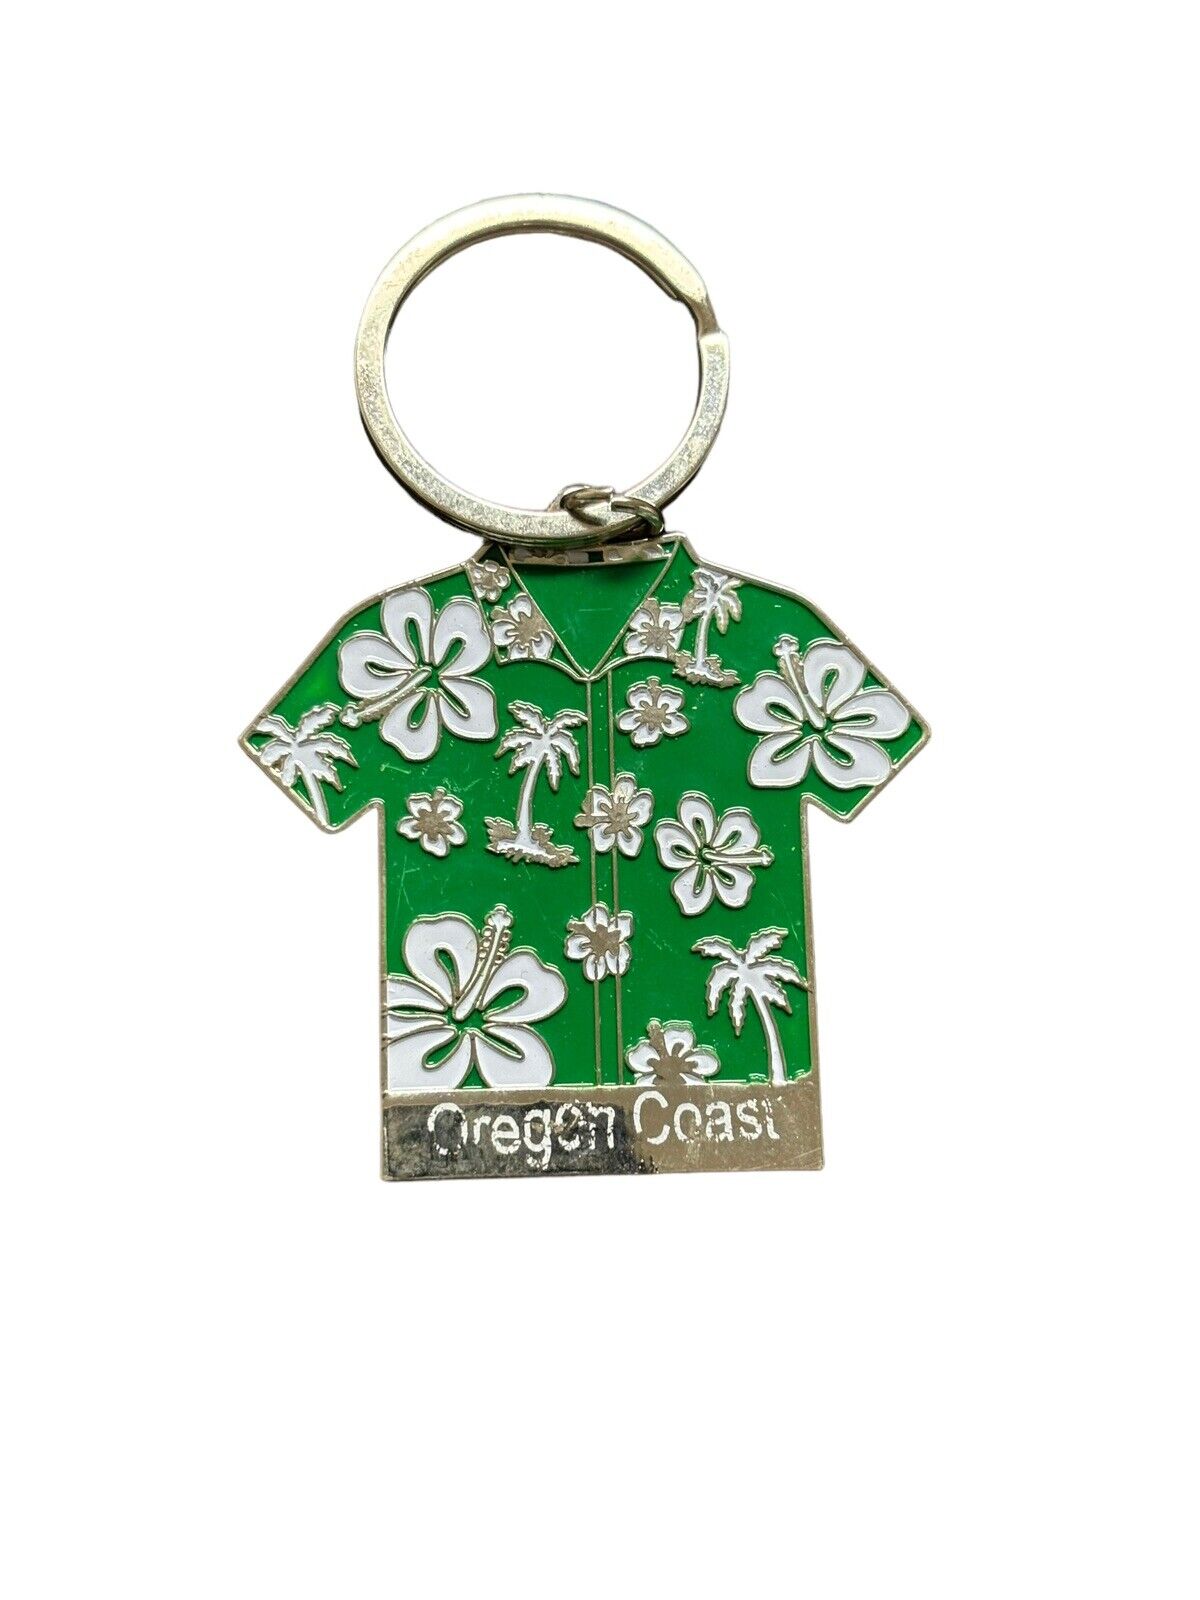 Oregon Coast Green Hawaiin Shirt Tropical Keychain Ring Souvenir Travel Beach